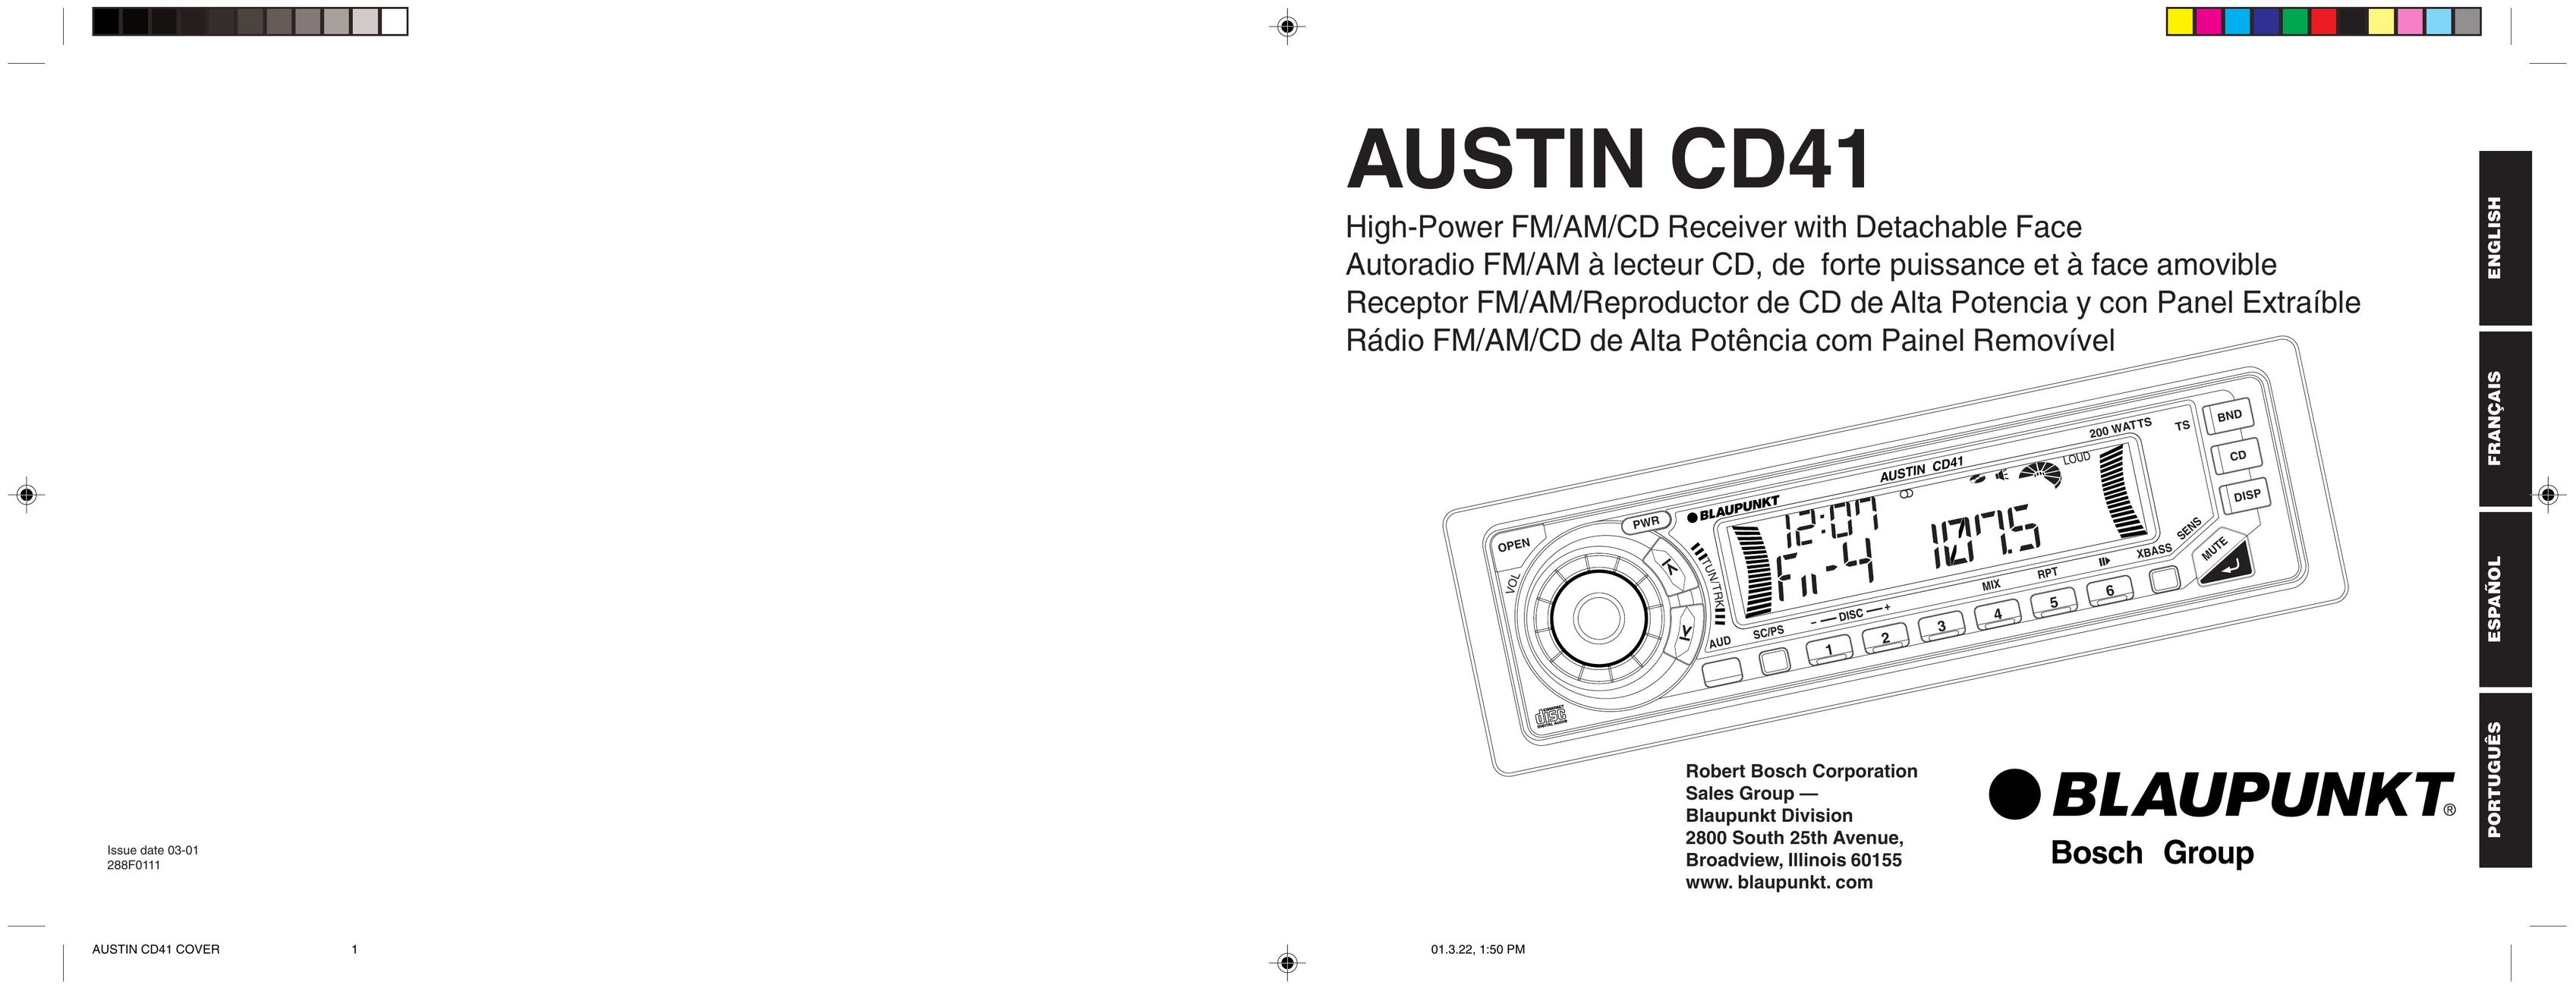 Blaupunkt AUSTIN CD41 Car Stereo System User Manual